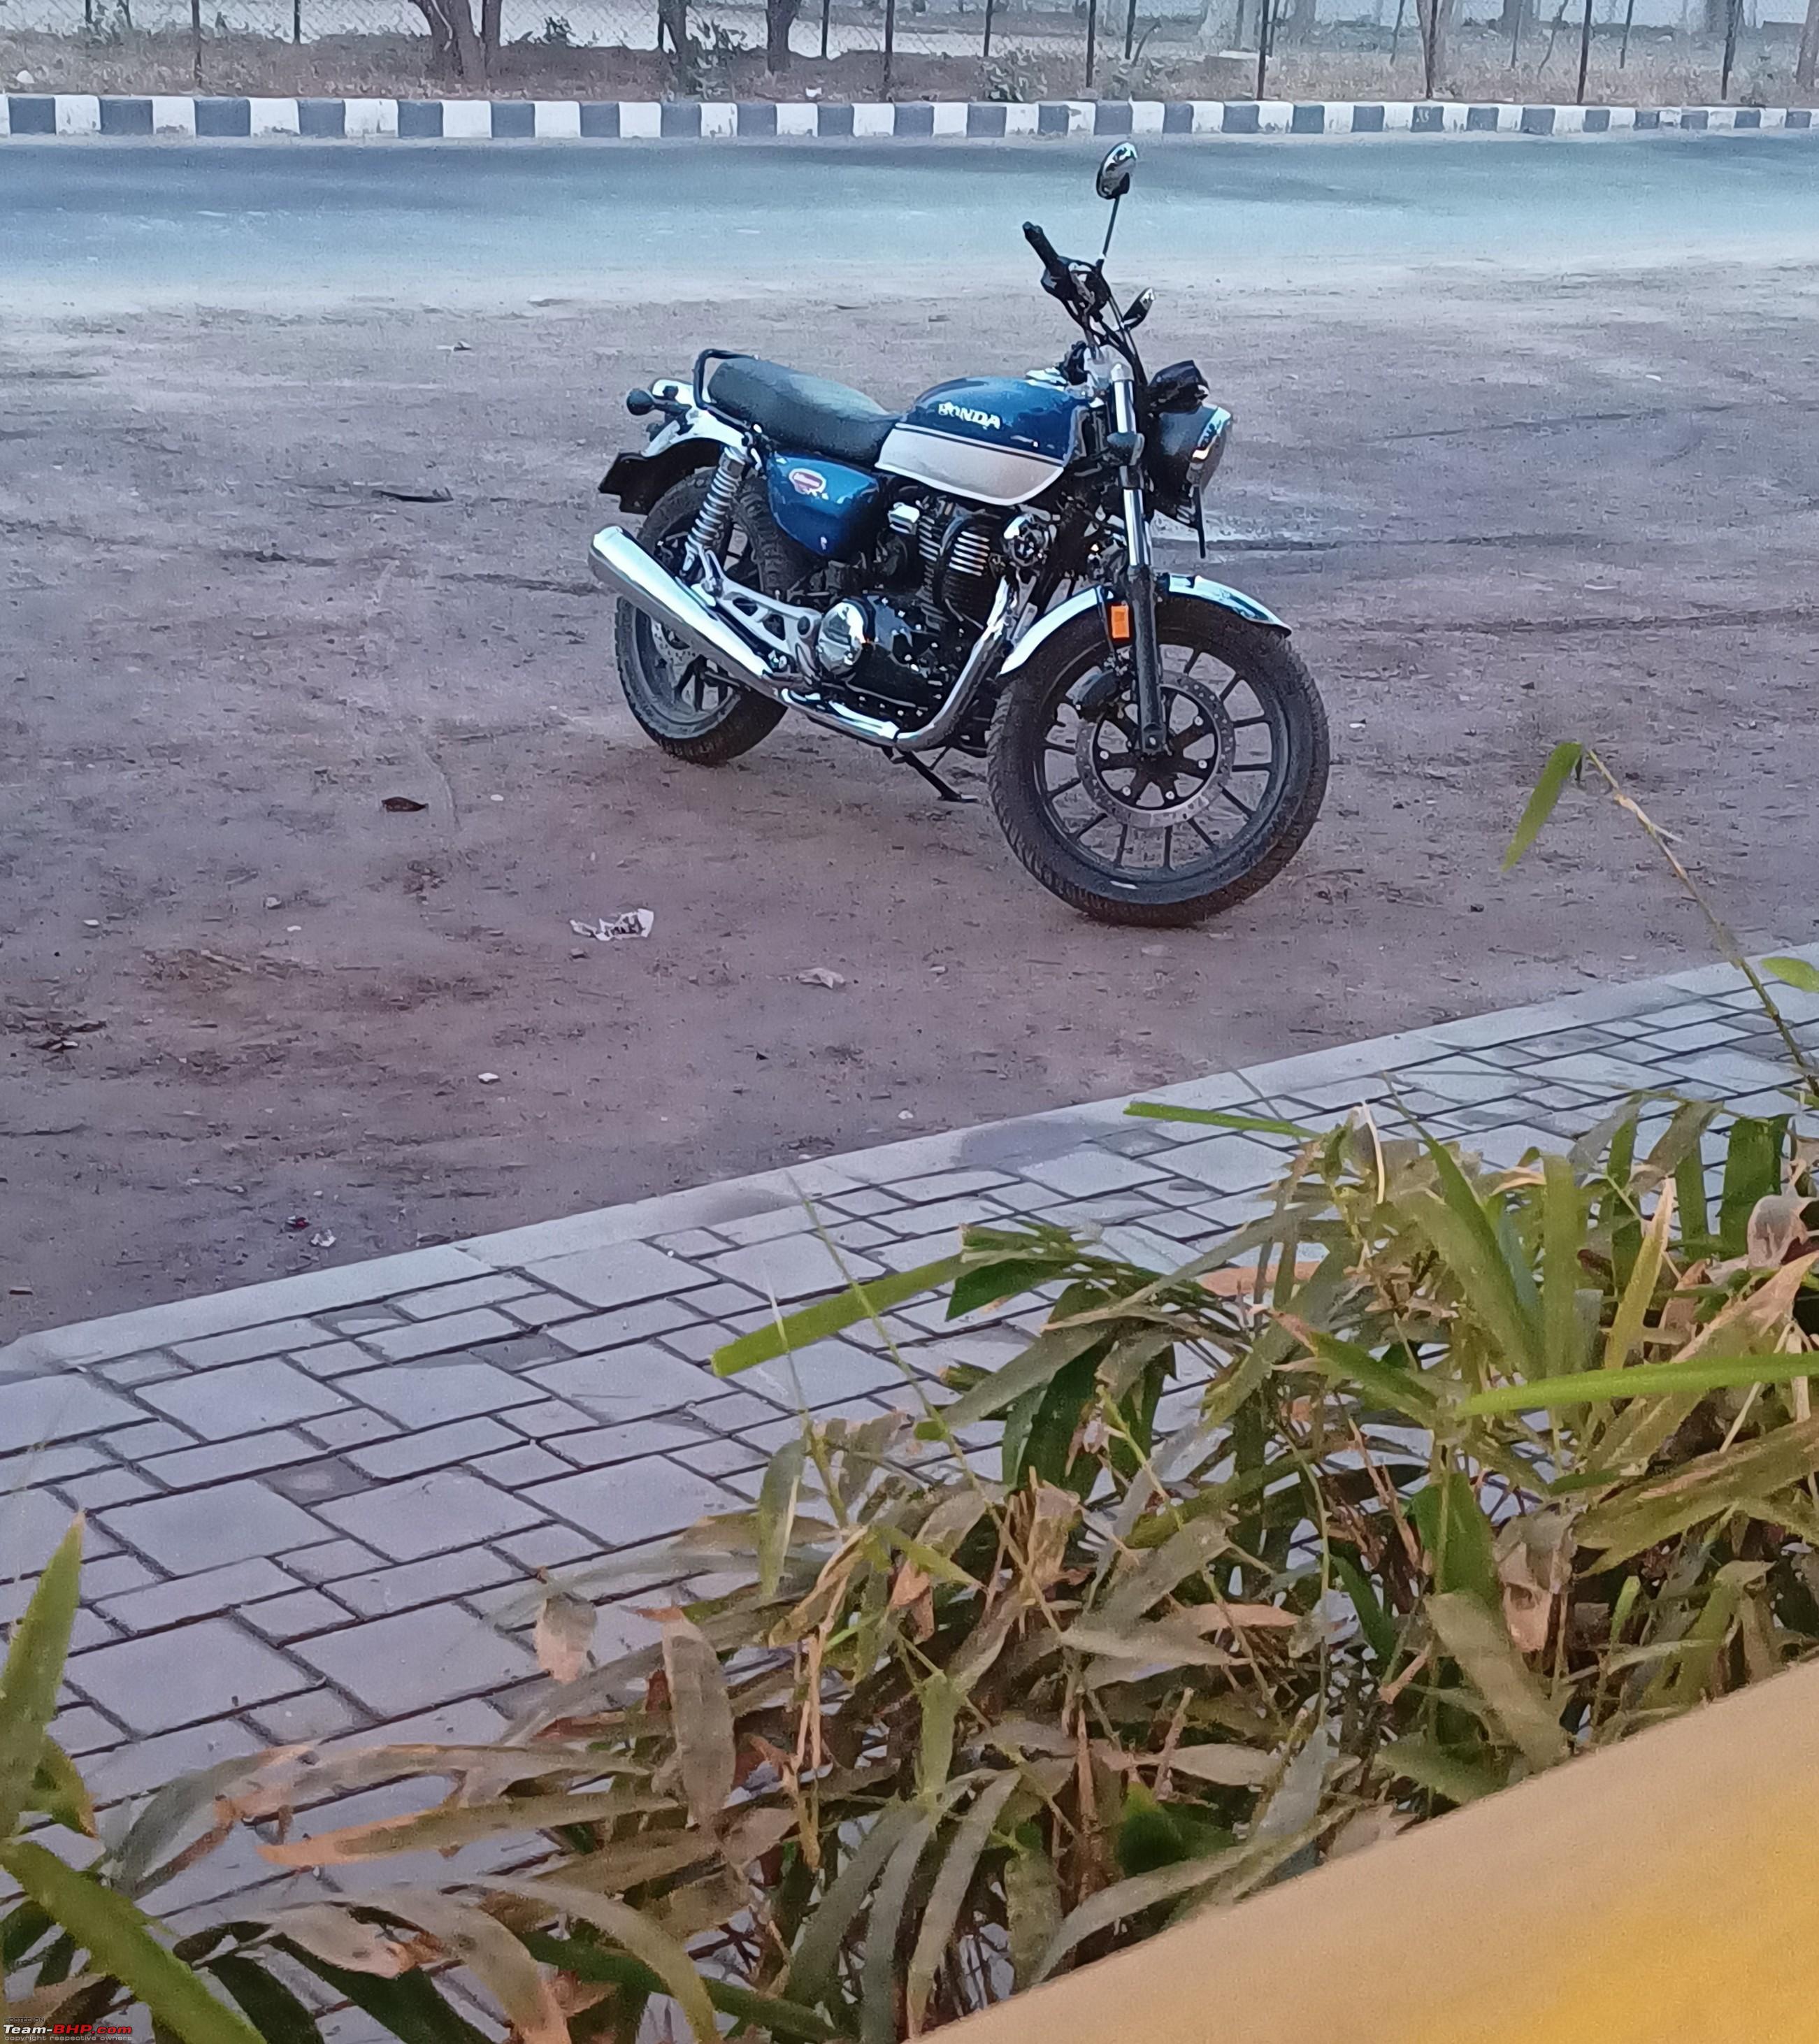 Bigger Suzuki Intruder (250 cc) coming to India – Report